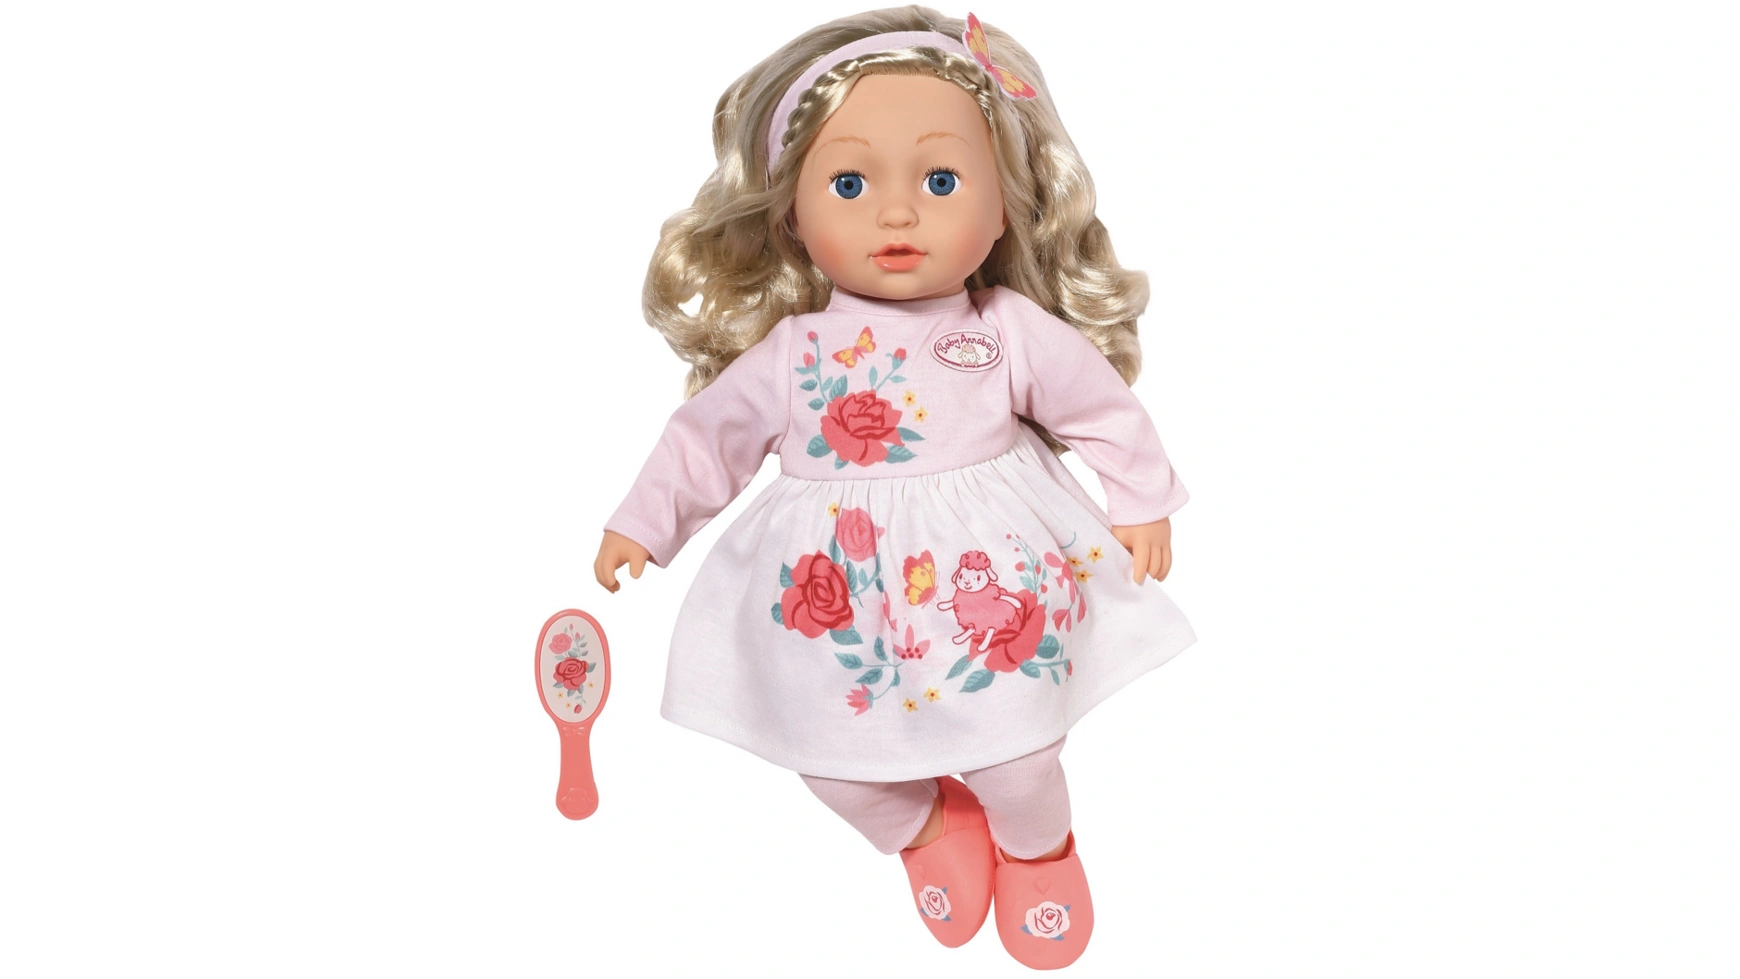 Zapf Creation Baby Annabell Sophia 43см, Игровая кукла с приятным мягким тельцем цена и фото